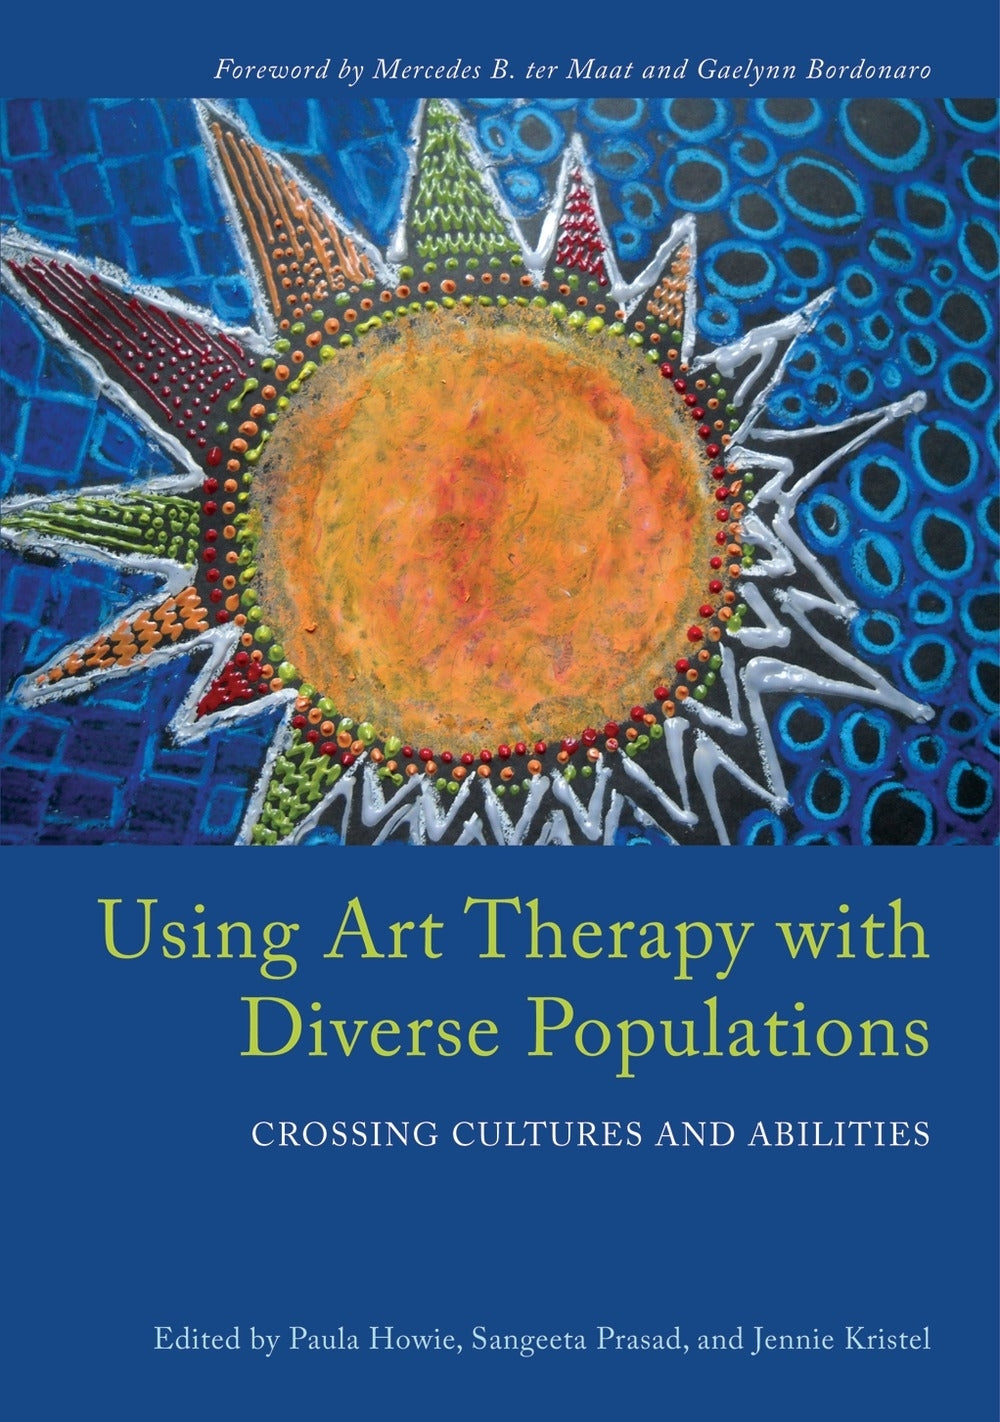 Using Art Therapy with Diverse Populations by Sangeeta Prasad, Paula Howie, Mercedes B. ter Maat, Jennie Kristel, Gaelynn P. Wolf Bordonaro, No Author Listed